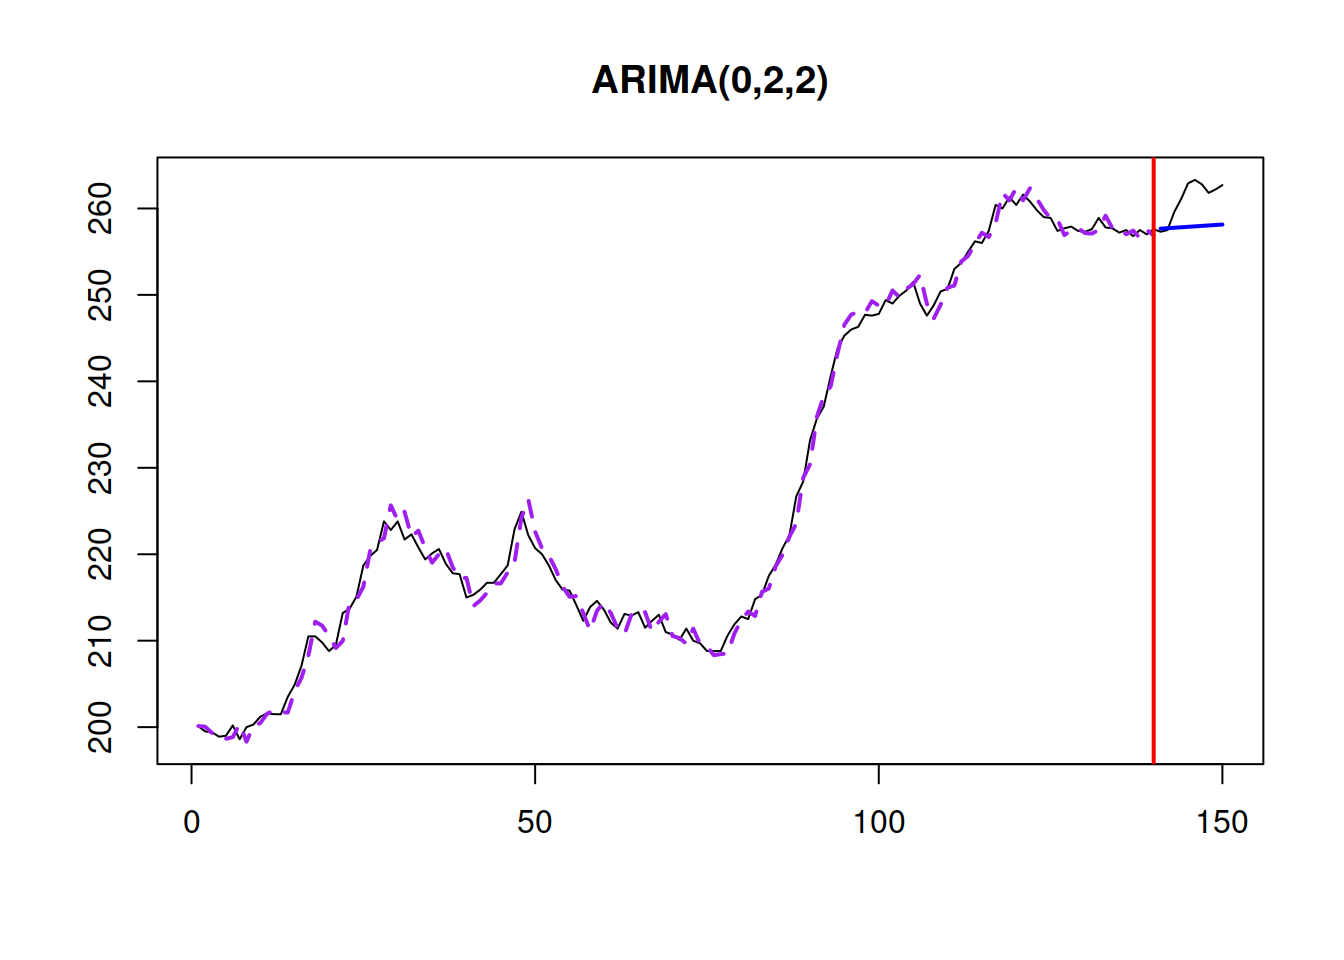 BJSales series and ARIMA(0,2,2).